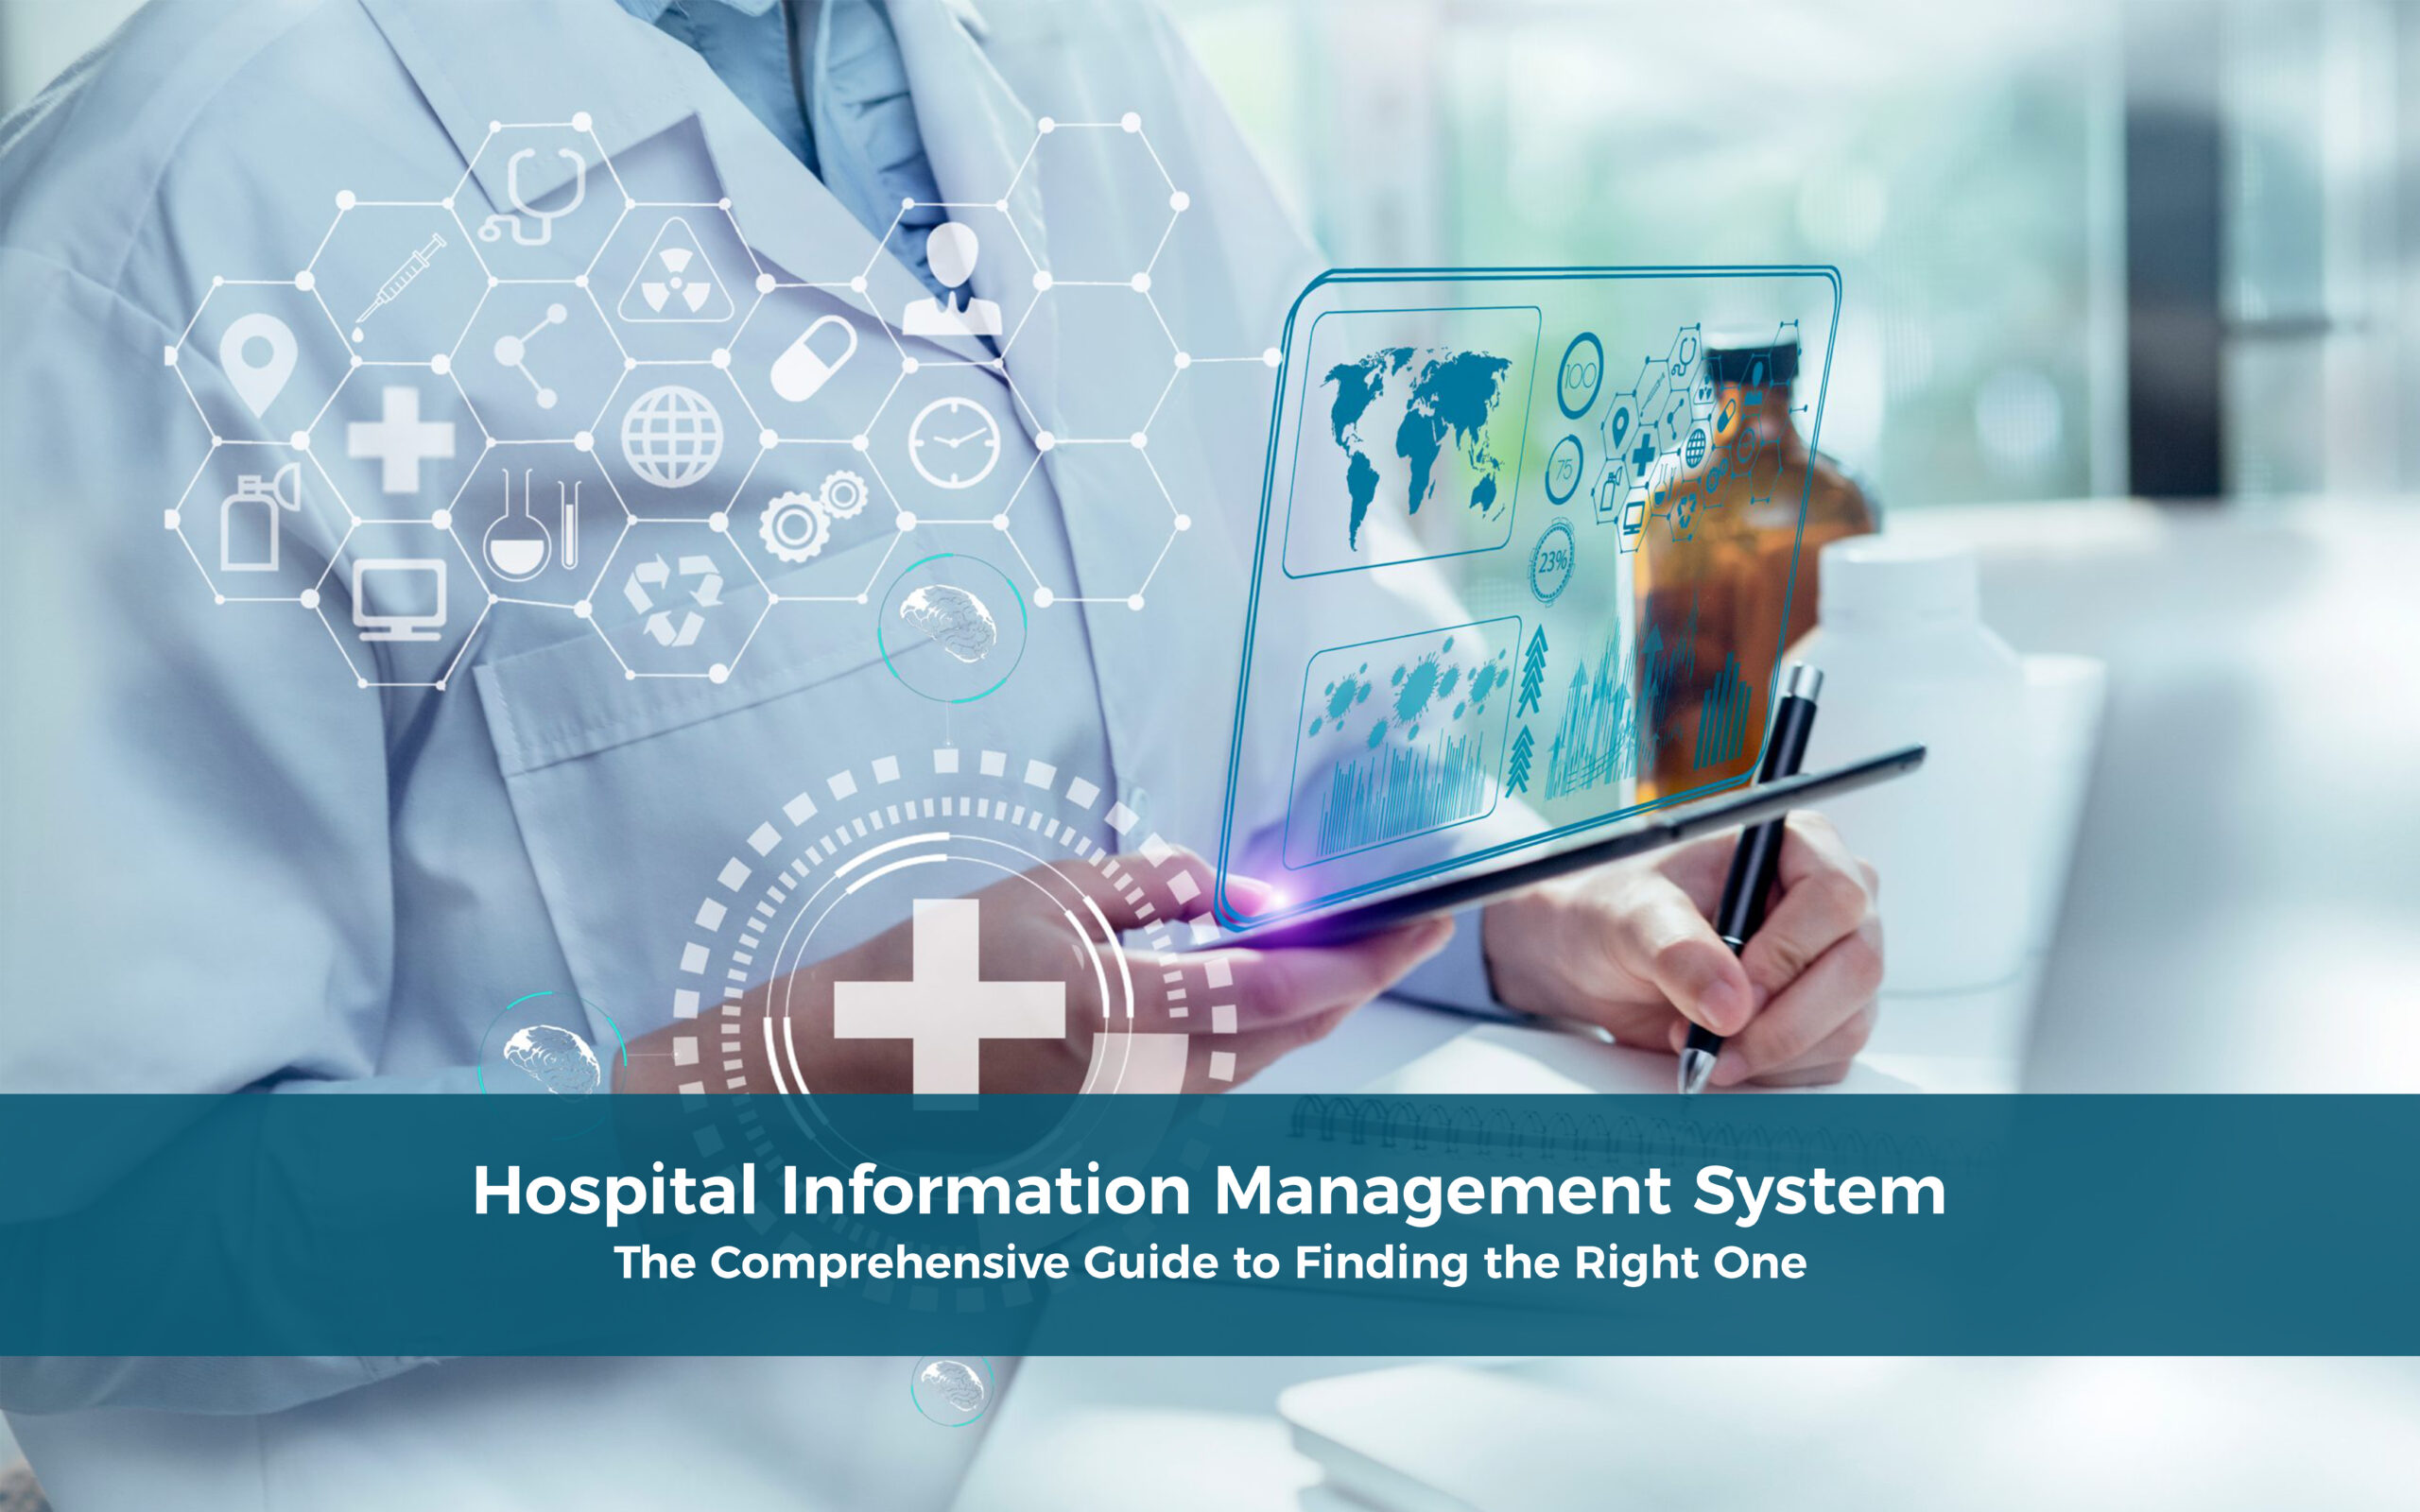 Doctor is using Hospital Information Management System